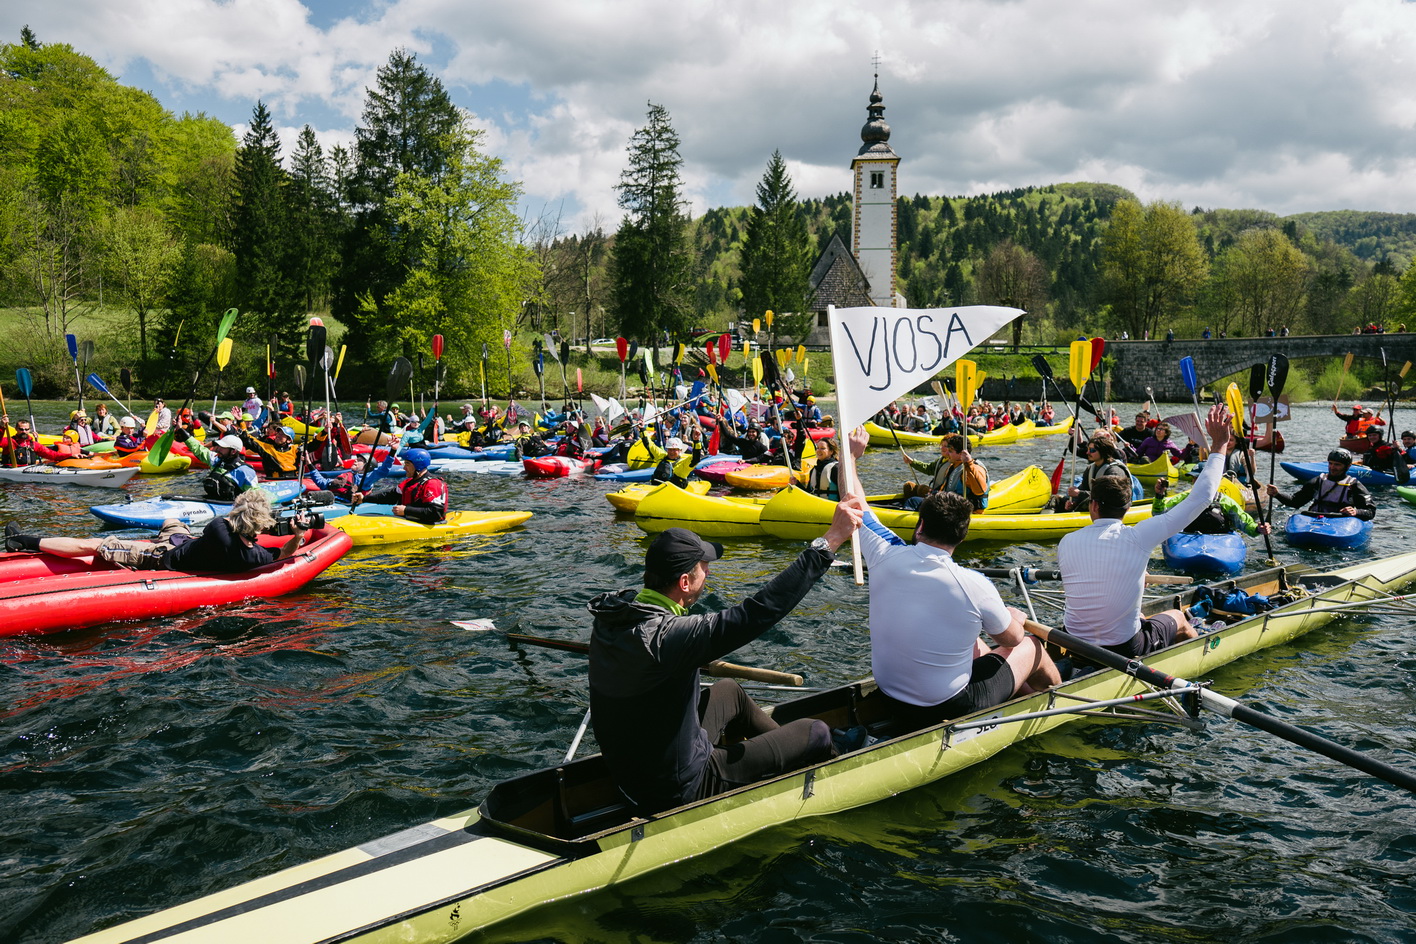 About 150 paddlers opened the Balkan Rivers Tour at Bohinj Lake in Slovenia on Saturday, April 16. © Jan Pirnat